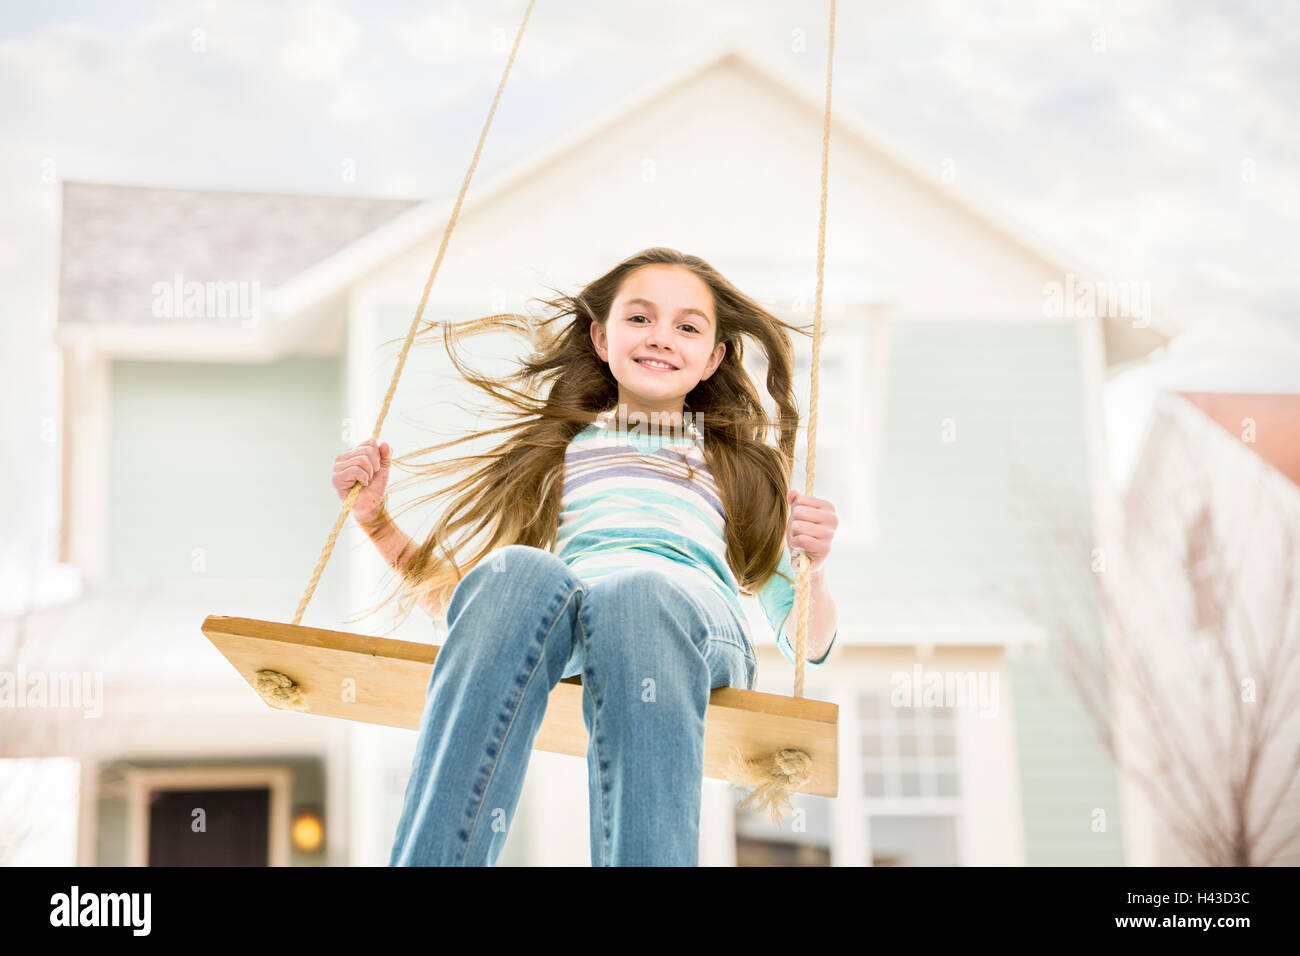 Caucasian girl on rope swing near house Stock Photo